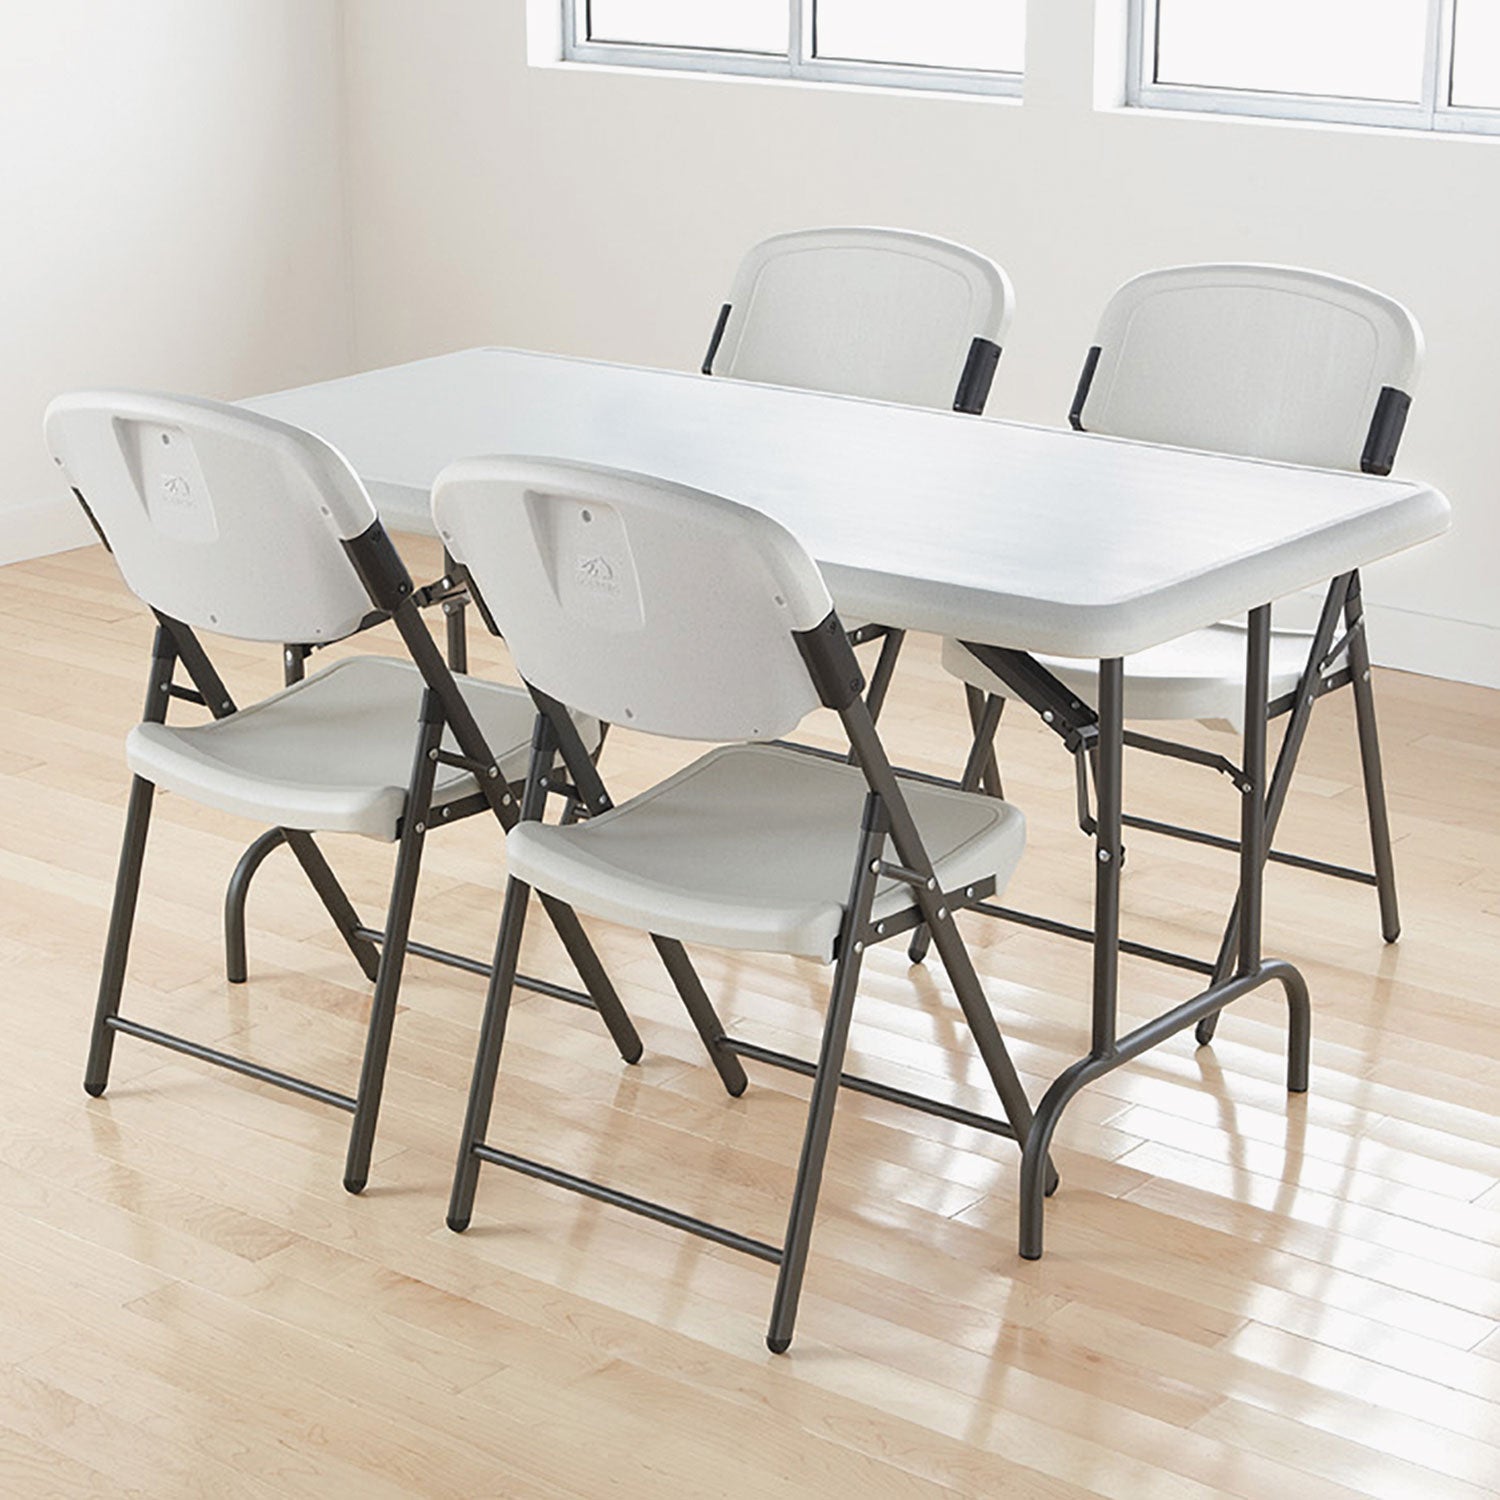 IndestrucTable Industrial Folding Table, Rectangular, 60" x 30" x 29", Platinum - 